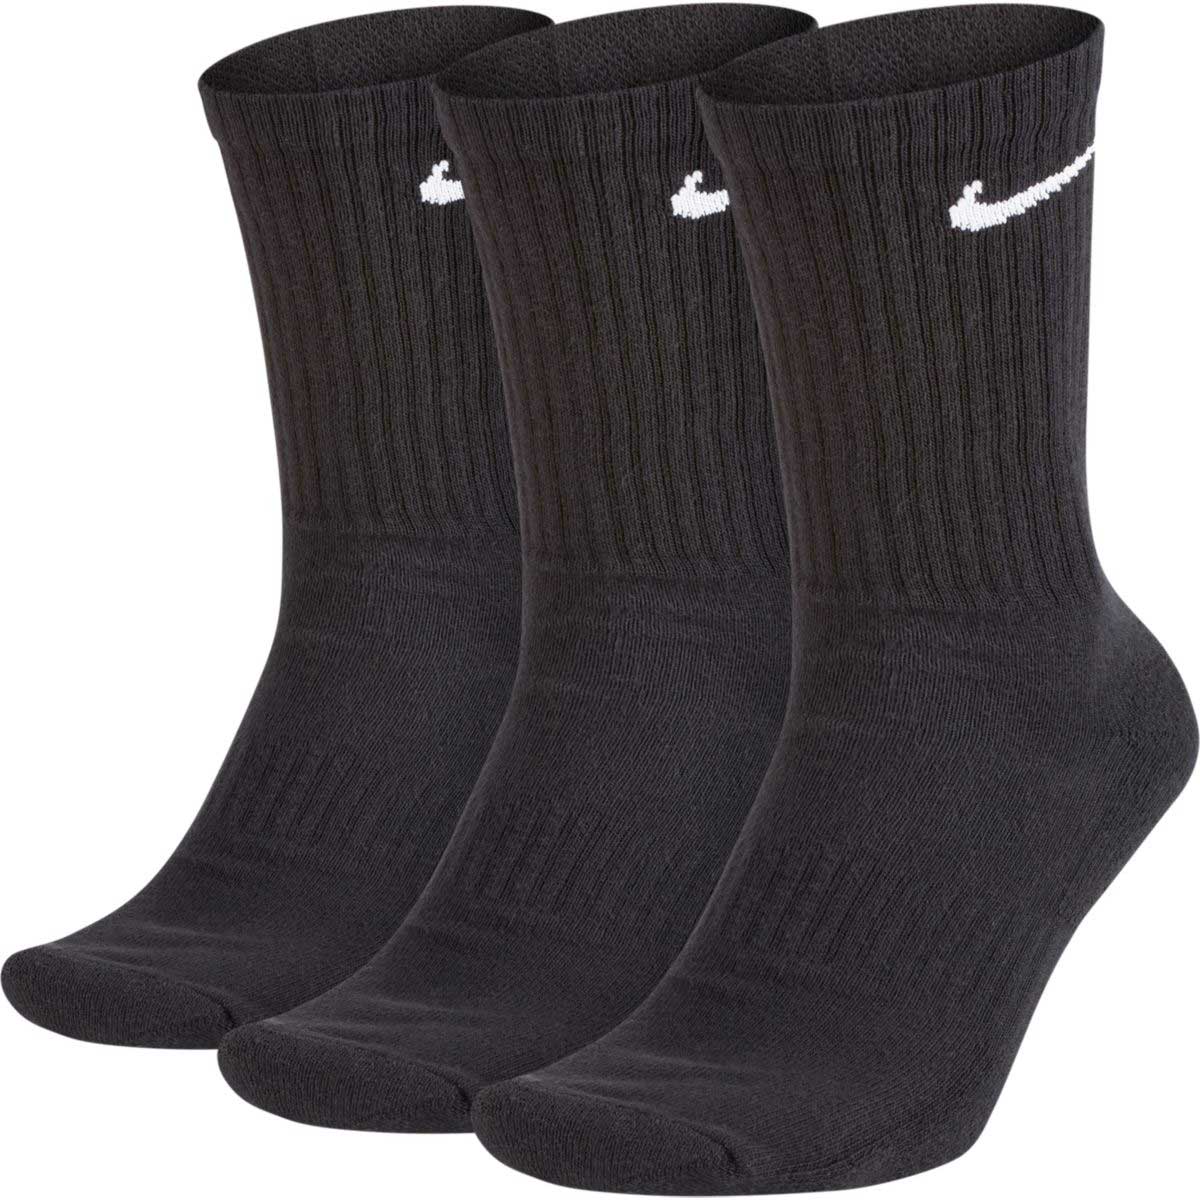 Nike SB Everyday Cushion Crew Sock 3 Pack in Black/White | Boardertown